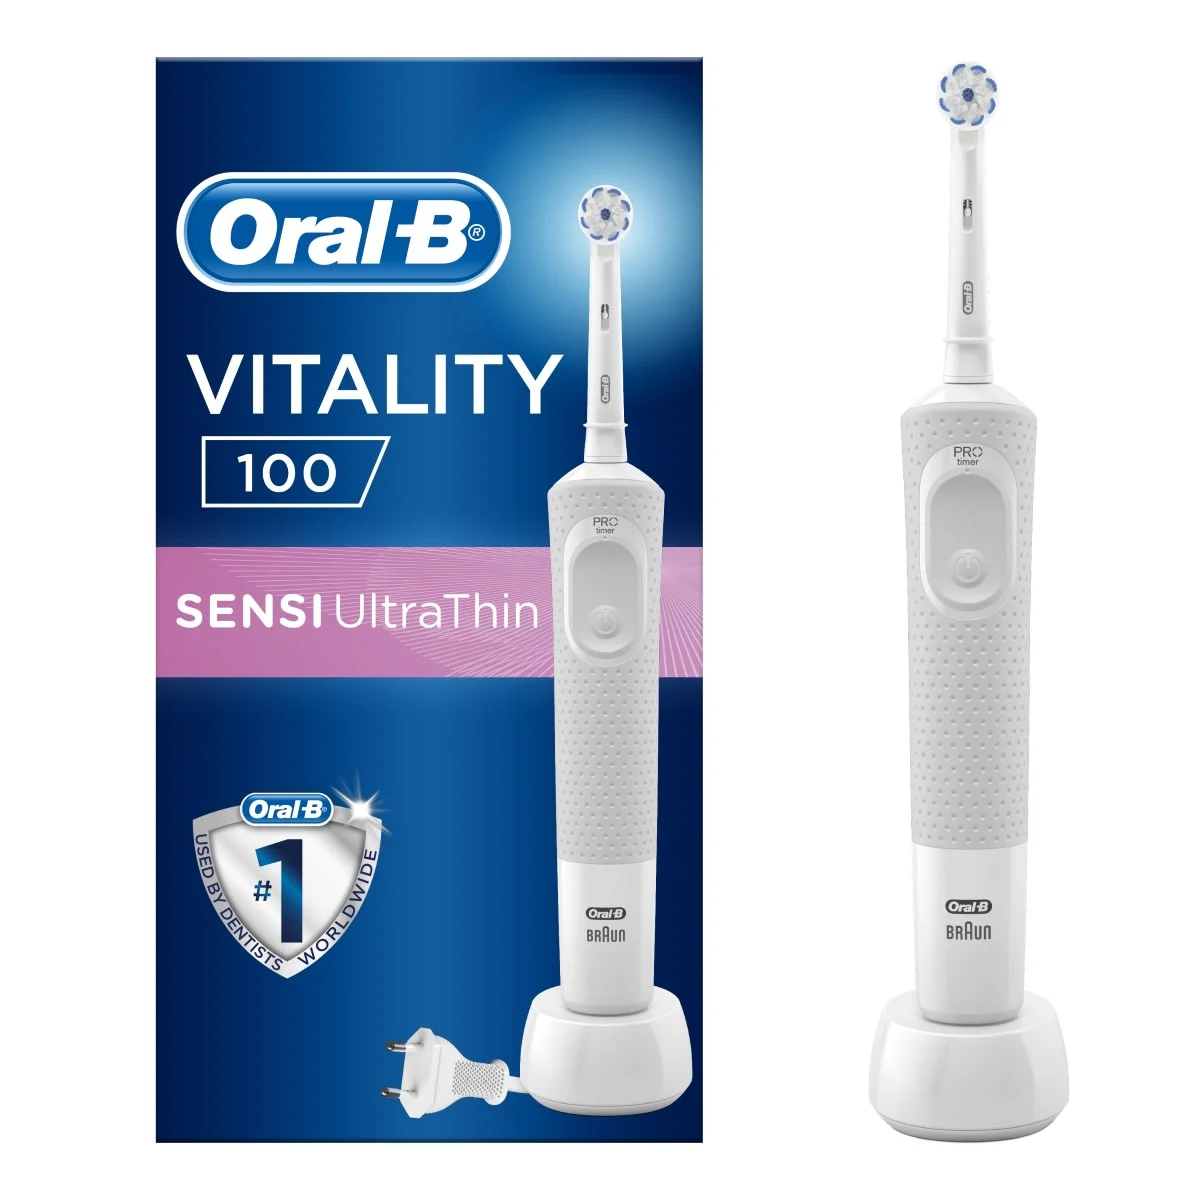 Oral-B Vitality Sensi UltraThin White Electric Toothbrush 